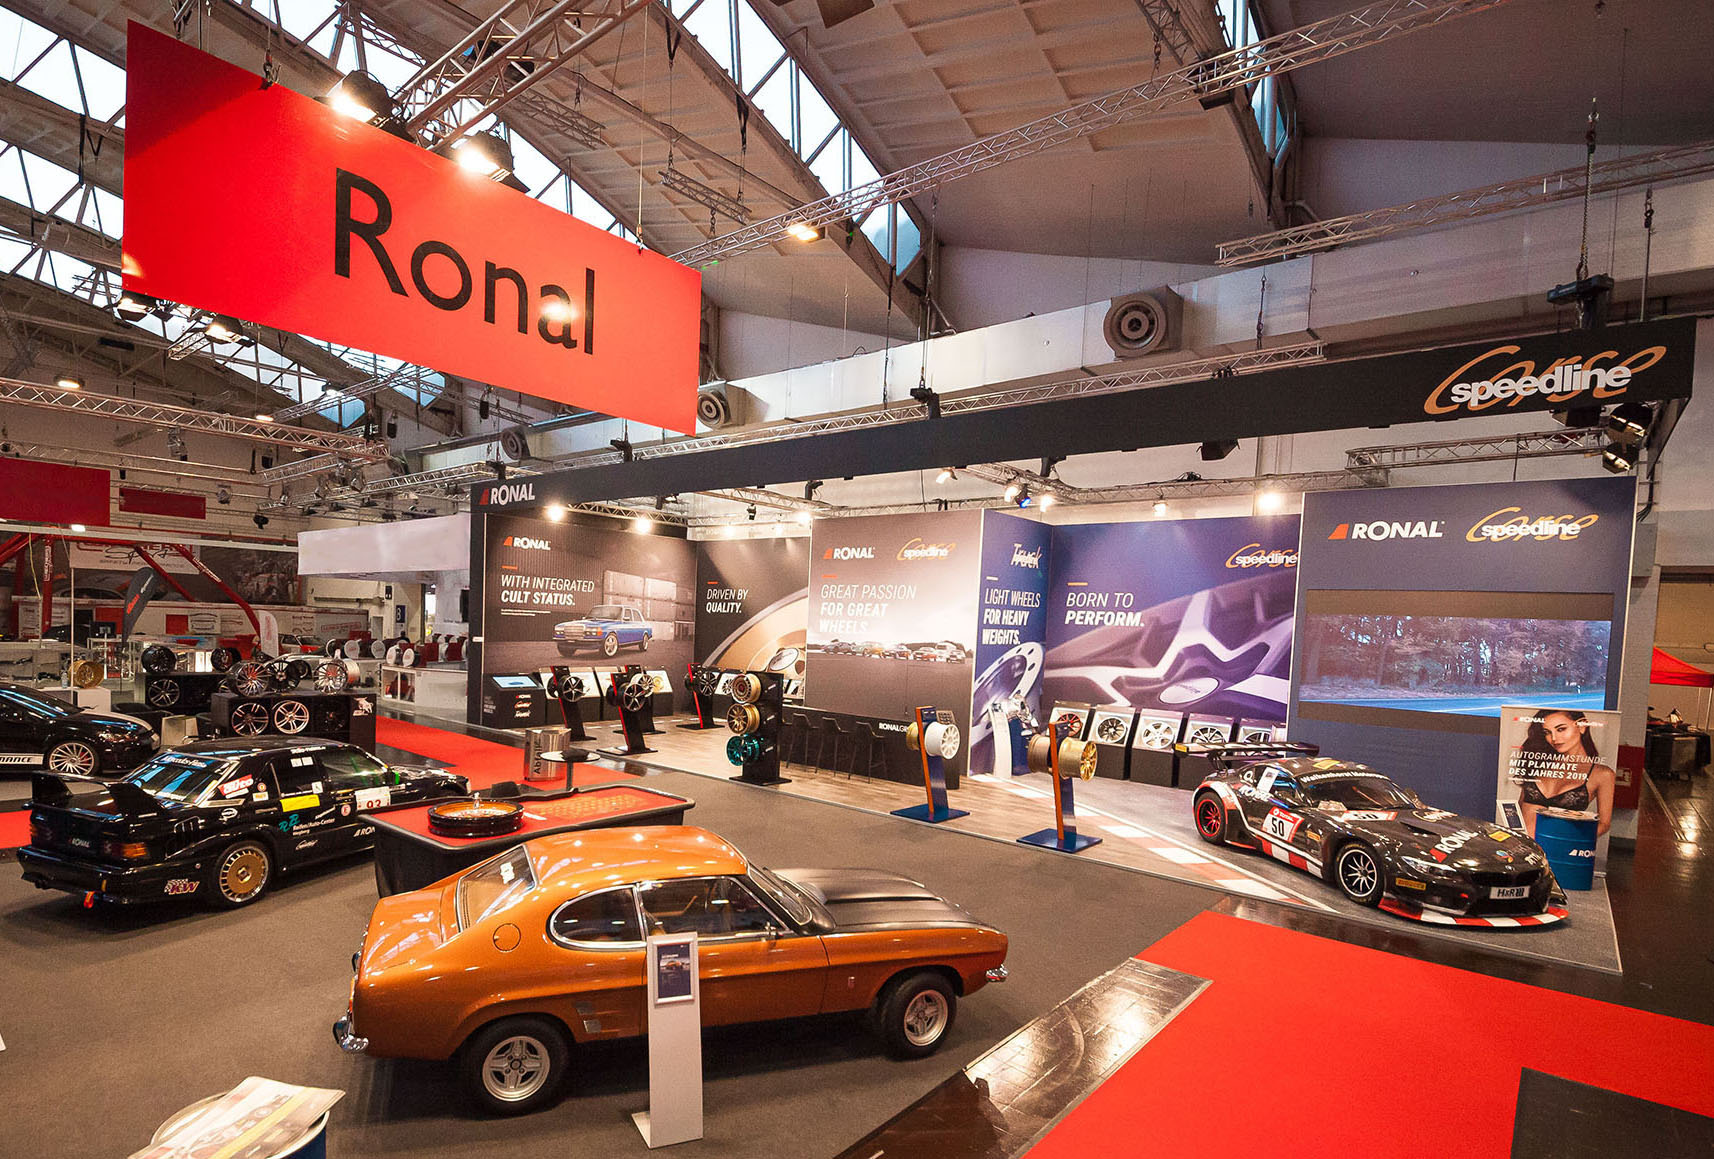 Ronal and Speedline Corse wheels exhibiting at Essen Motor Show 2022